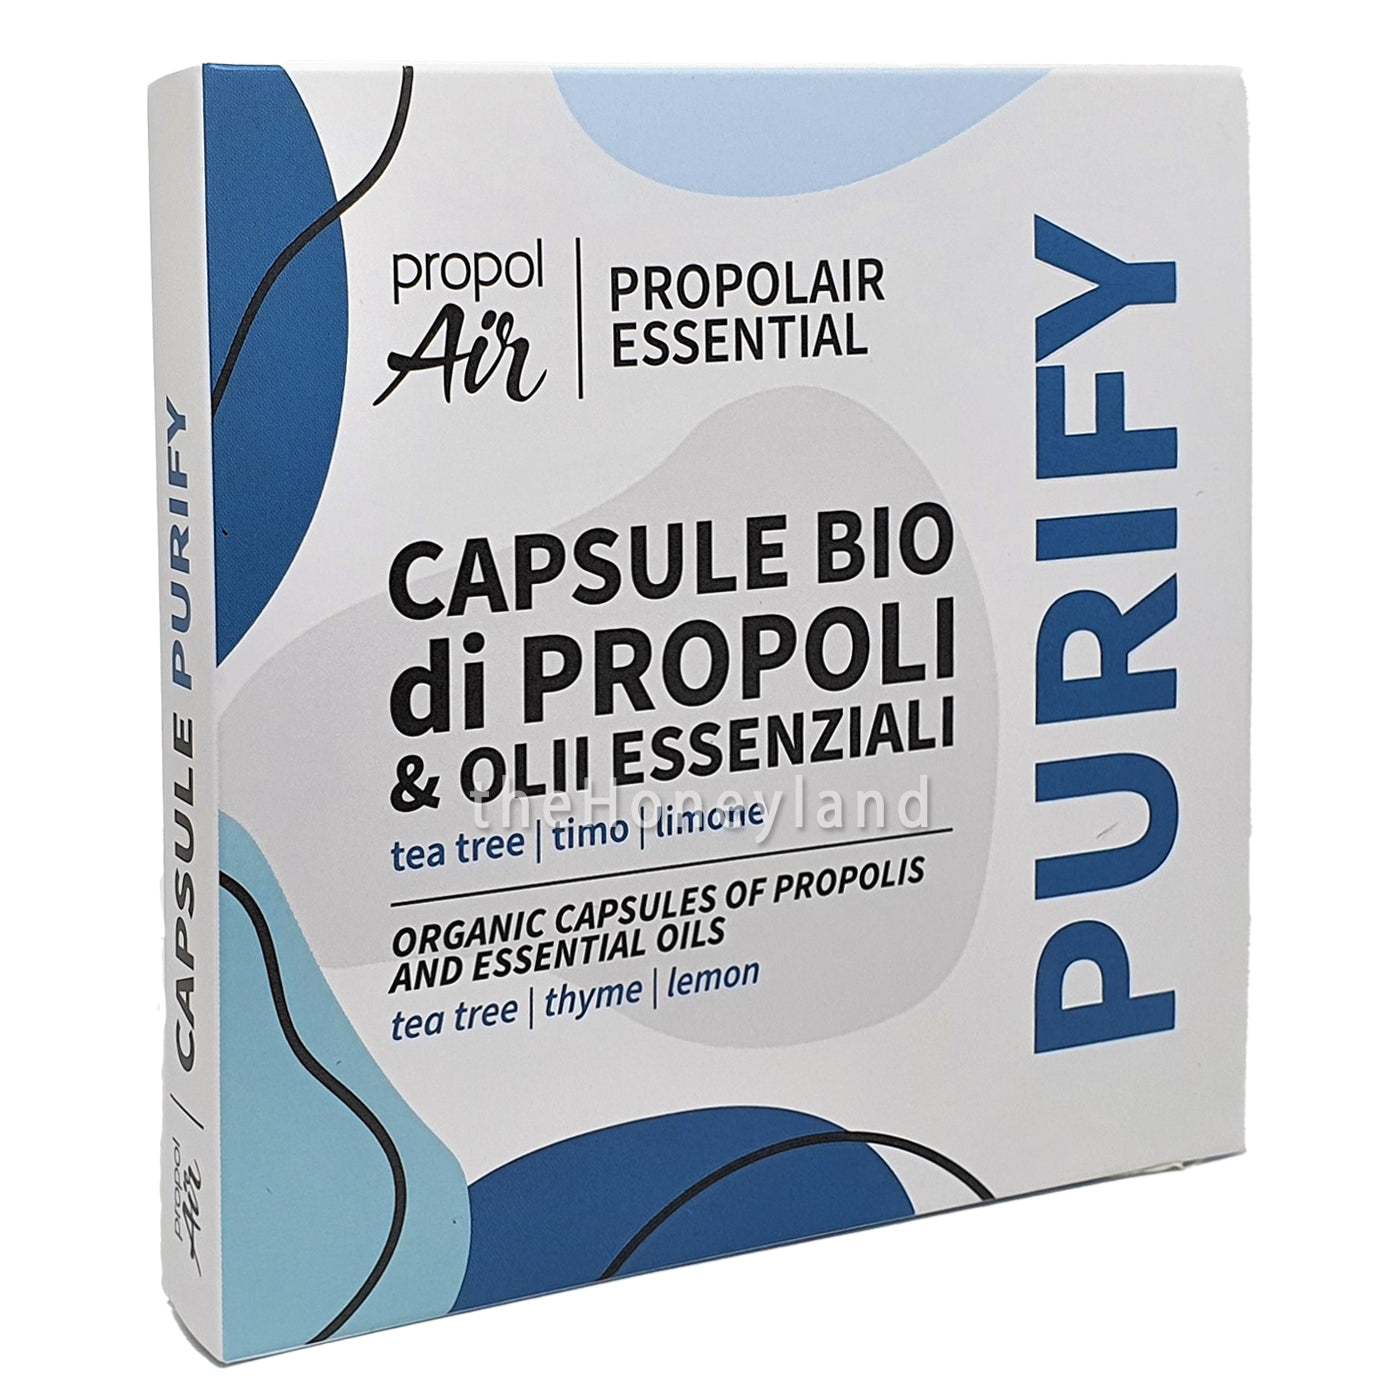 Propolis Bio Purify capsules with tea tree, thyme and lemon essential oils